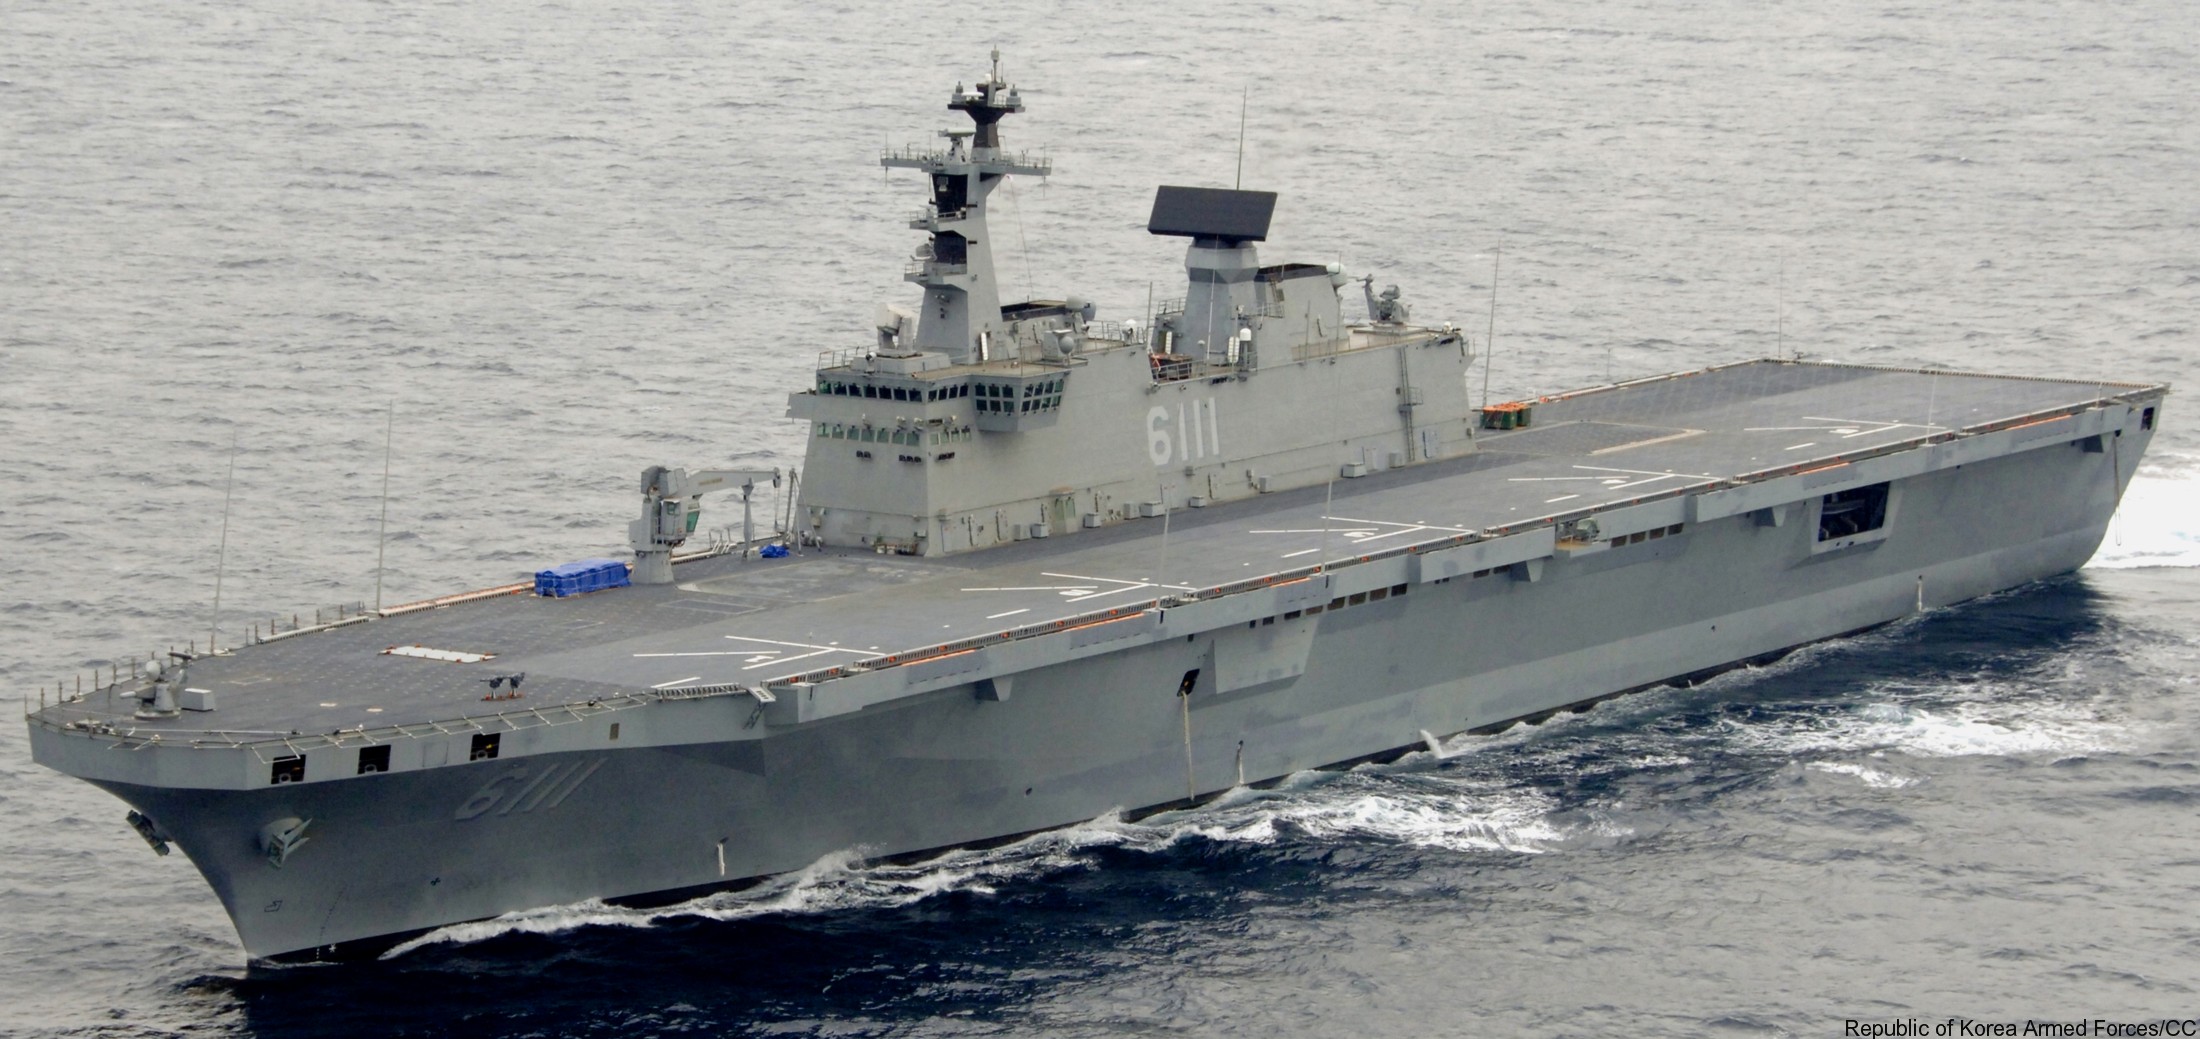 lph-6111 roks dokdo landing platform helicopter amphibious assault ship korean navy rokn 16